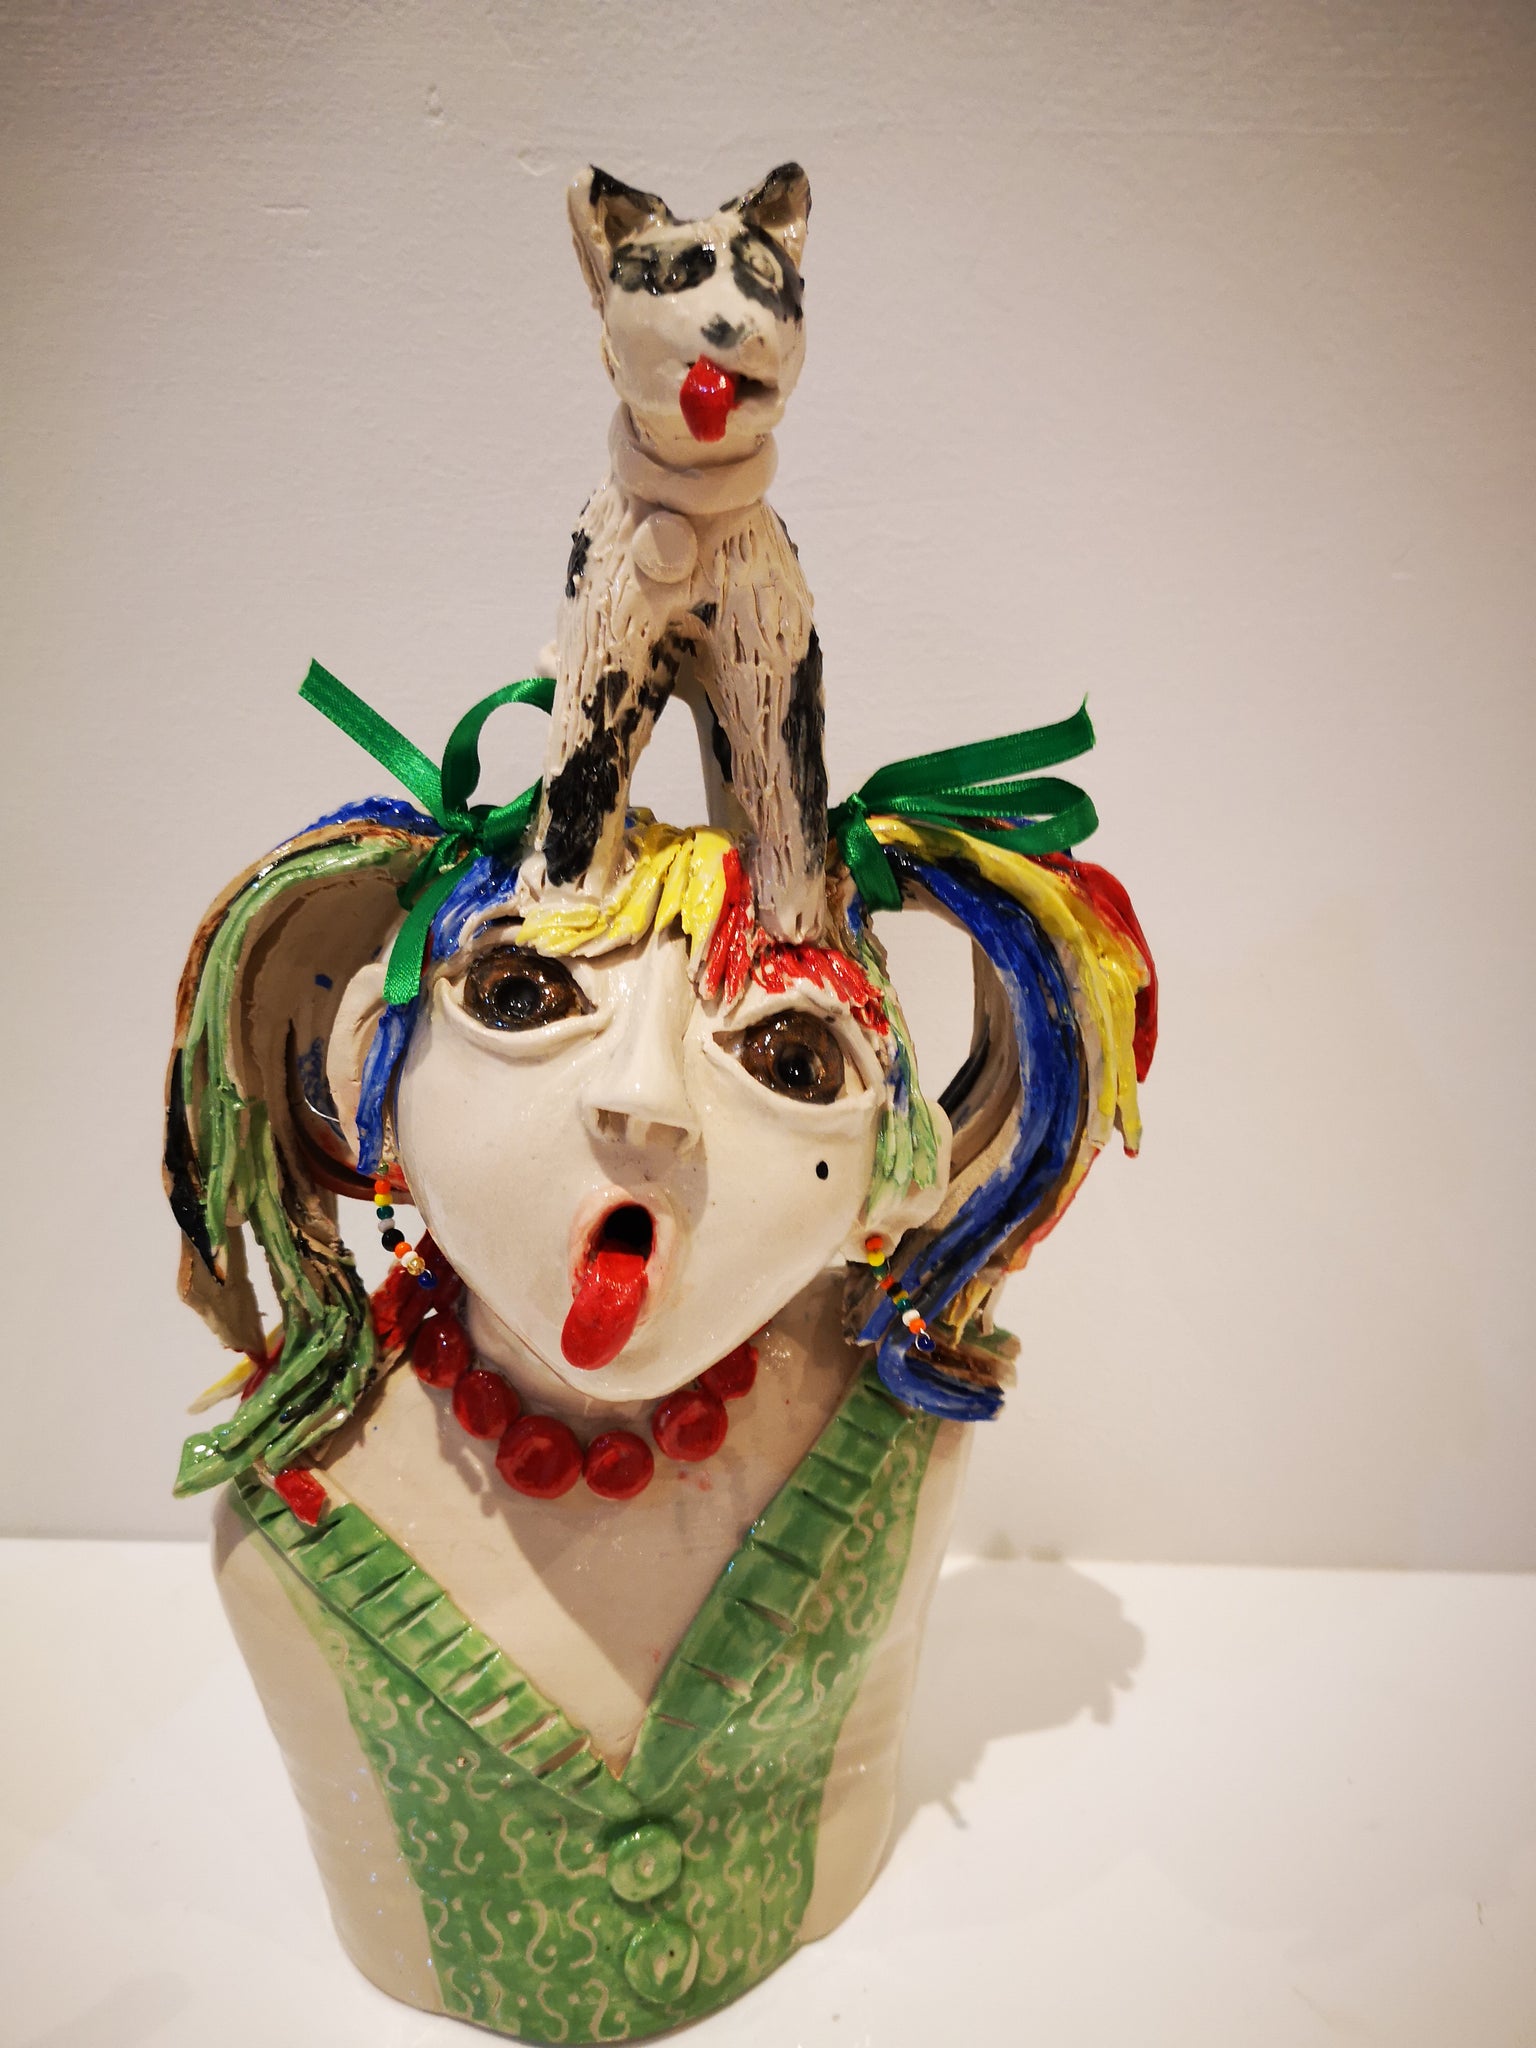 Barking mad ceramic figurine by Vivien Phelan